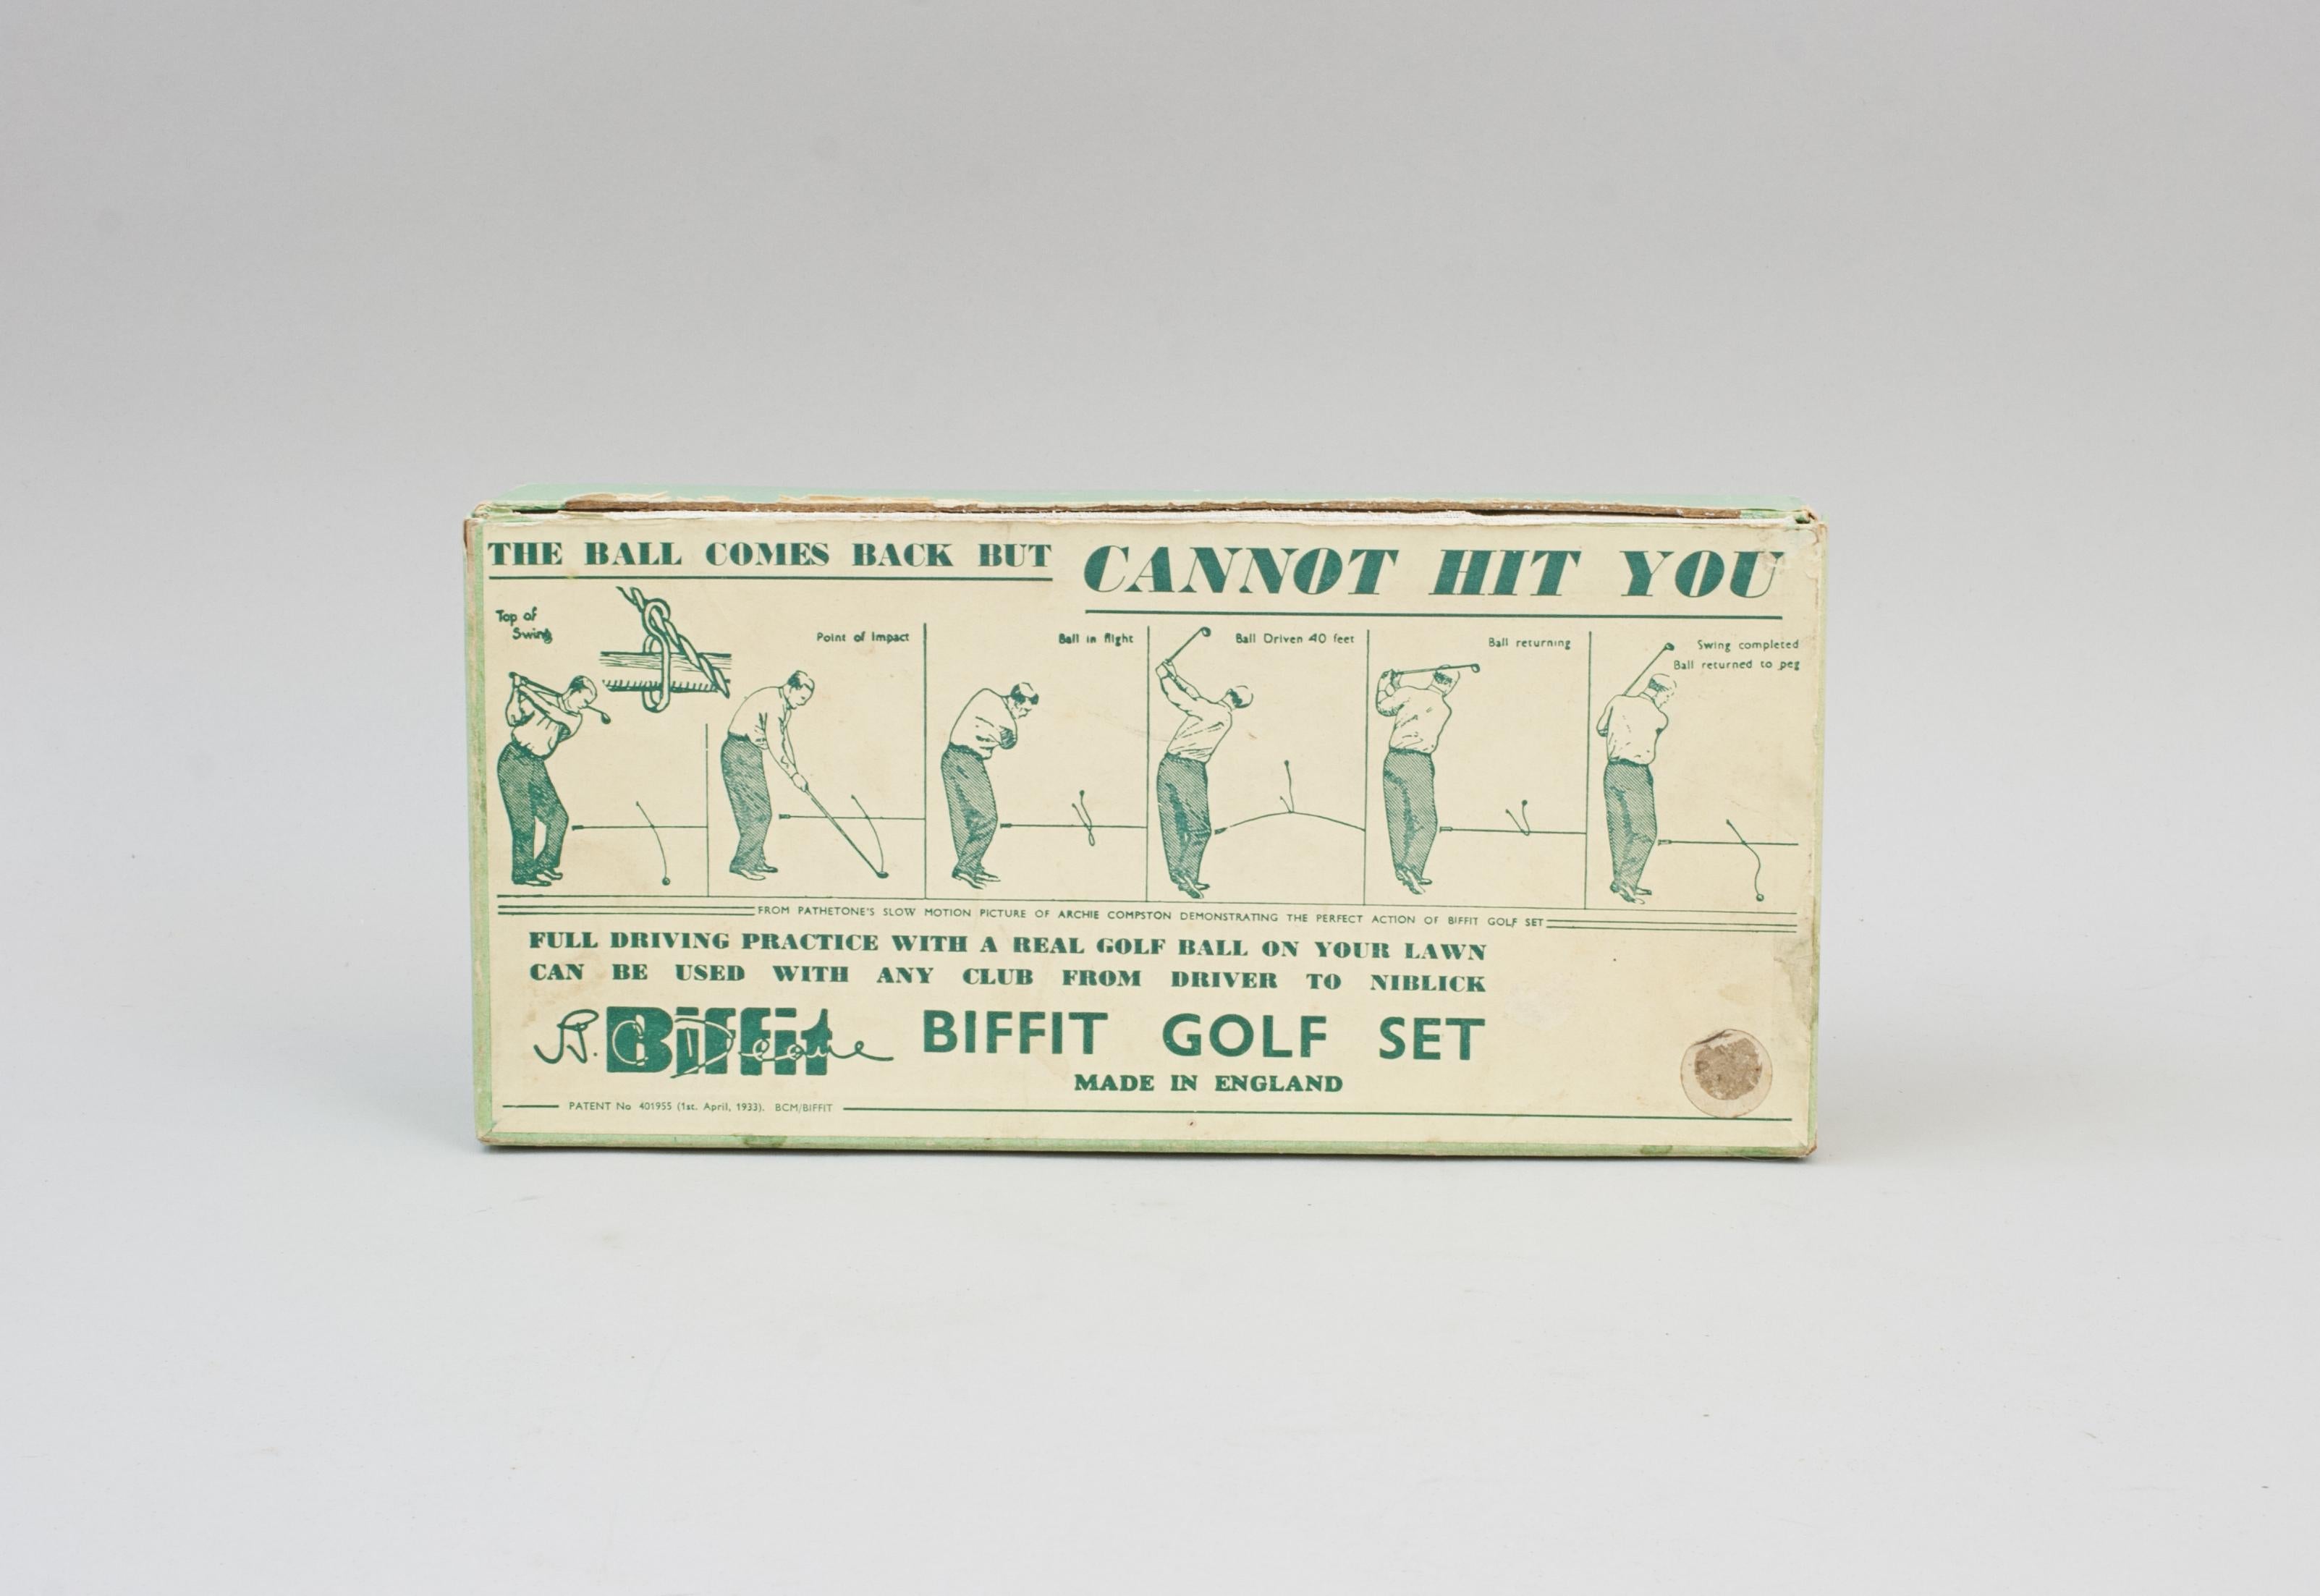 Vintage Biffit Golf Training Aid.
An original 